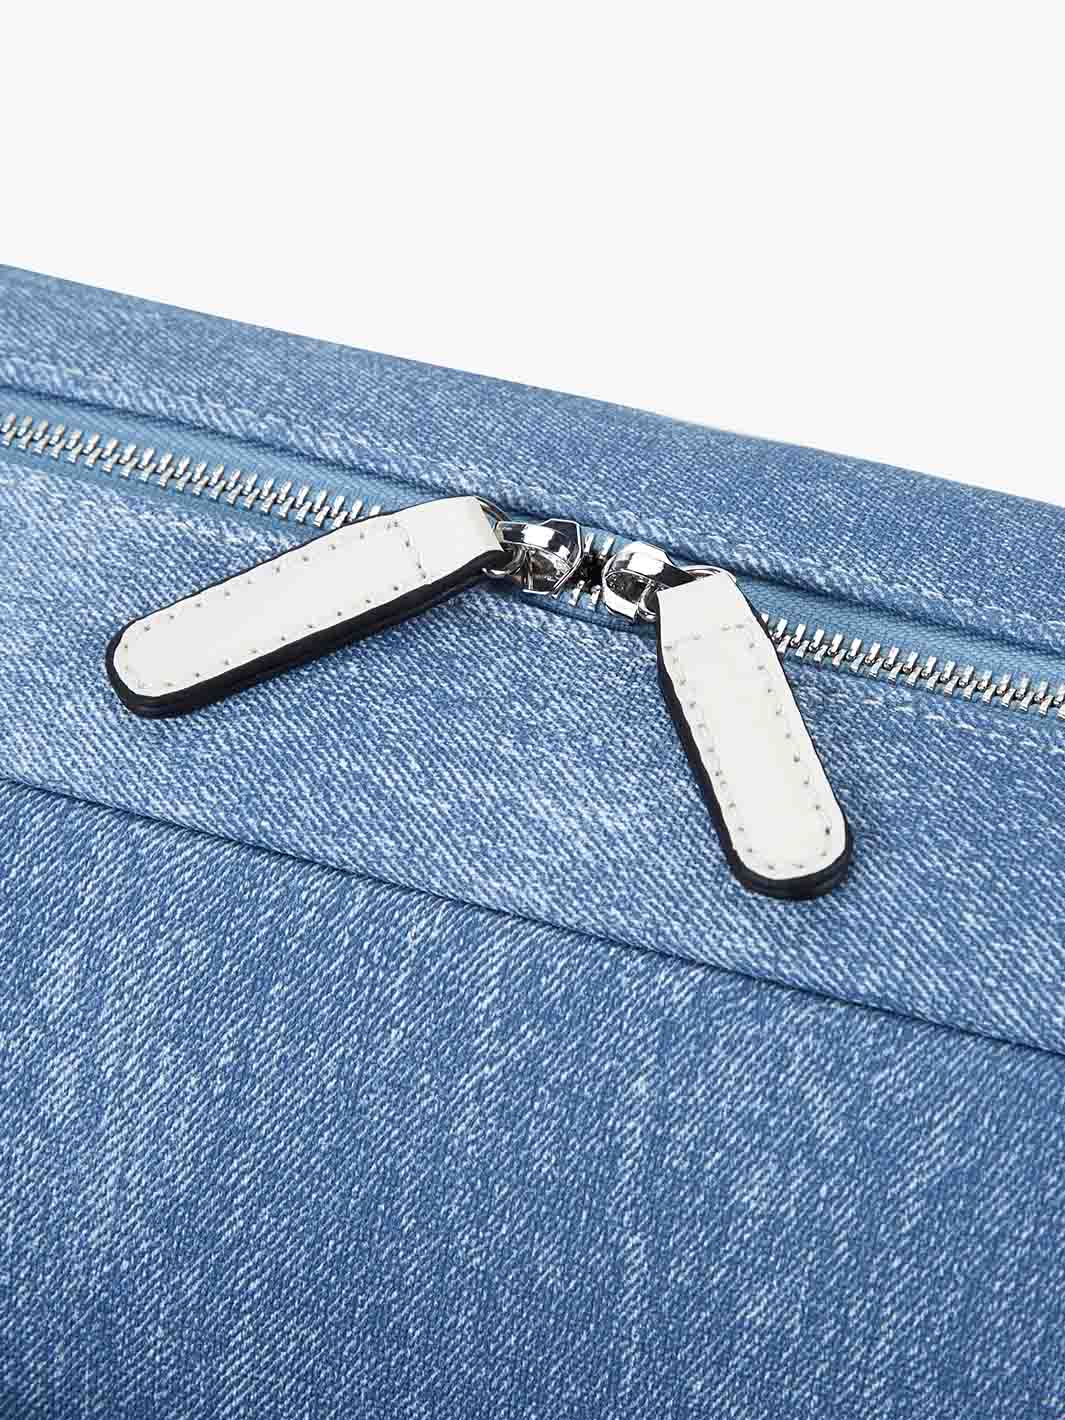 Denim-Inspired PU Fabric 15.6-Inch Briefcase